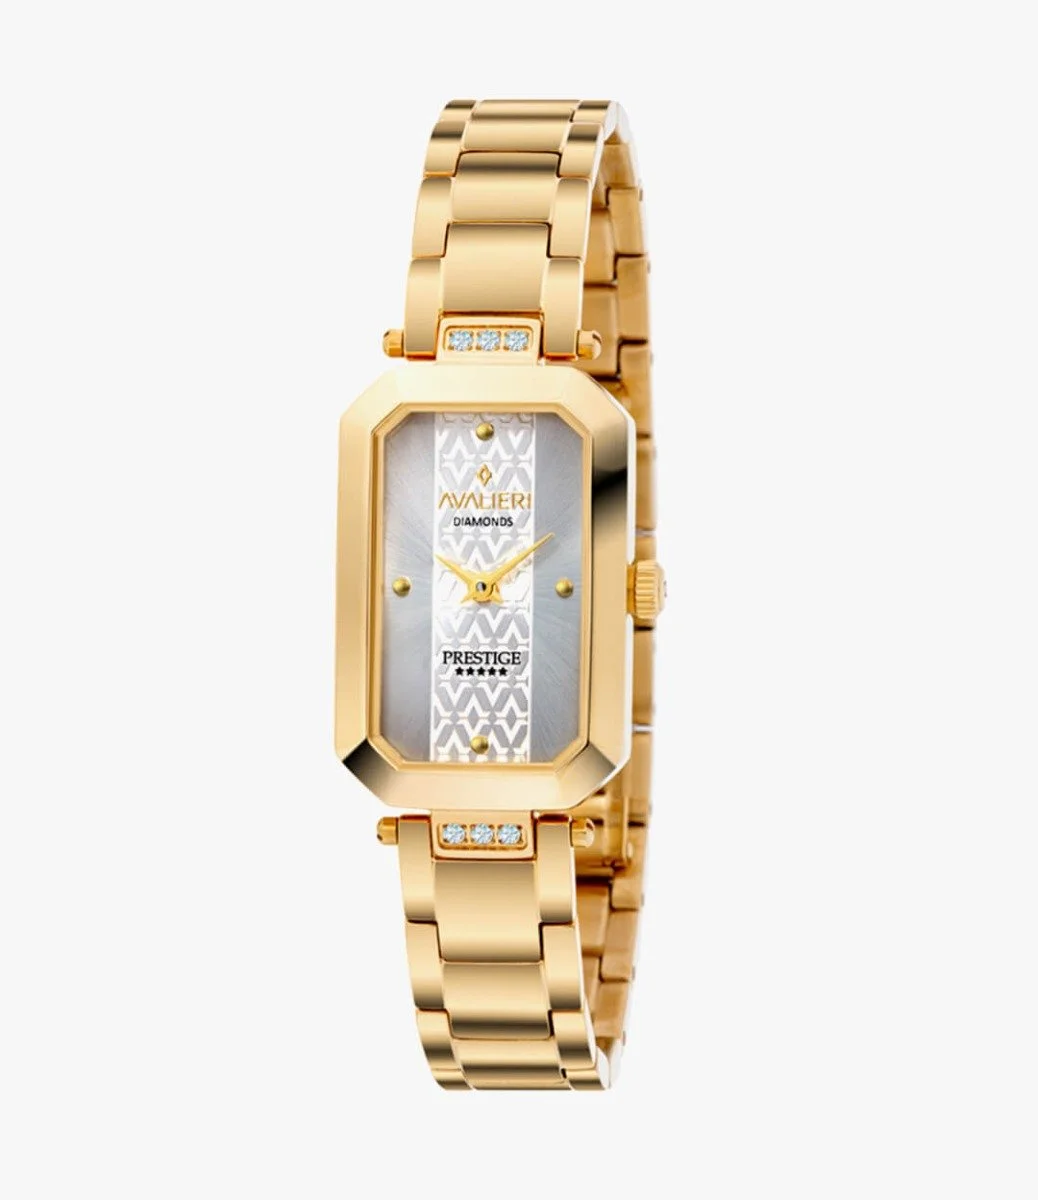 Avalieri Prestige Gold & Silver Watch